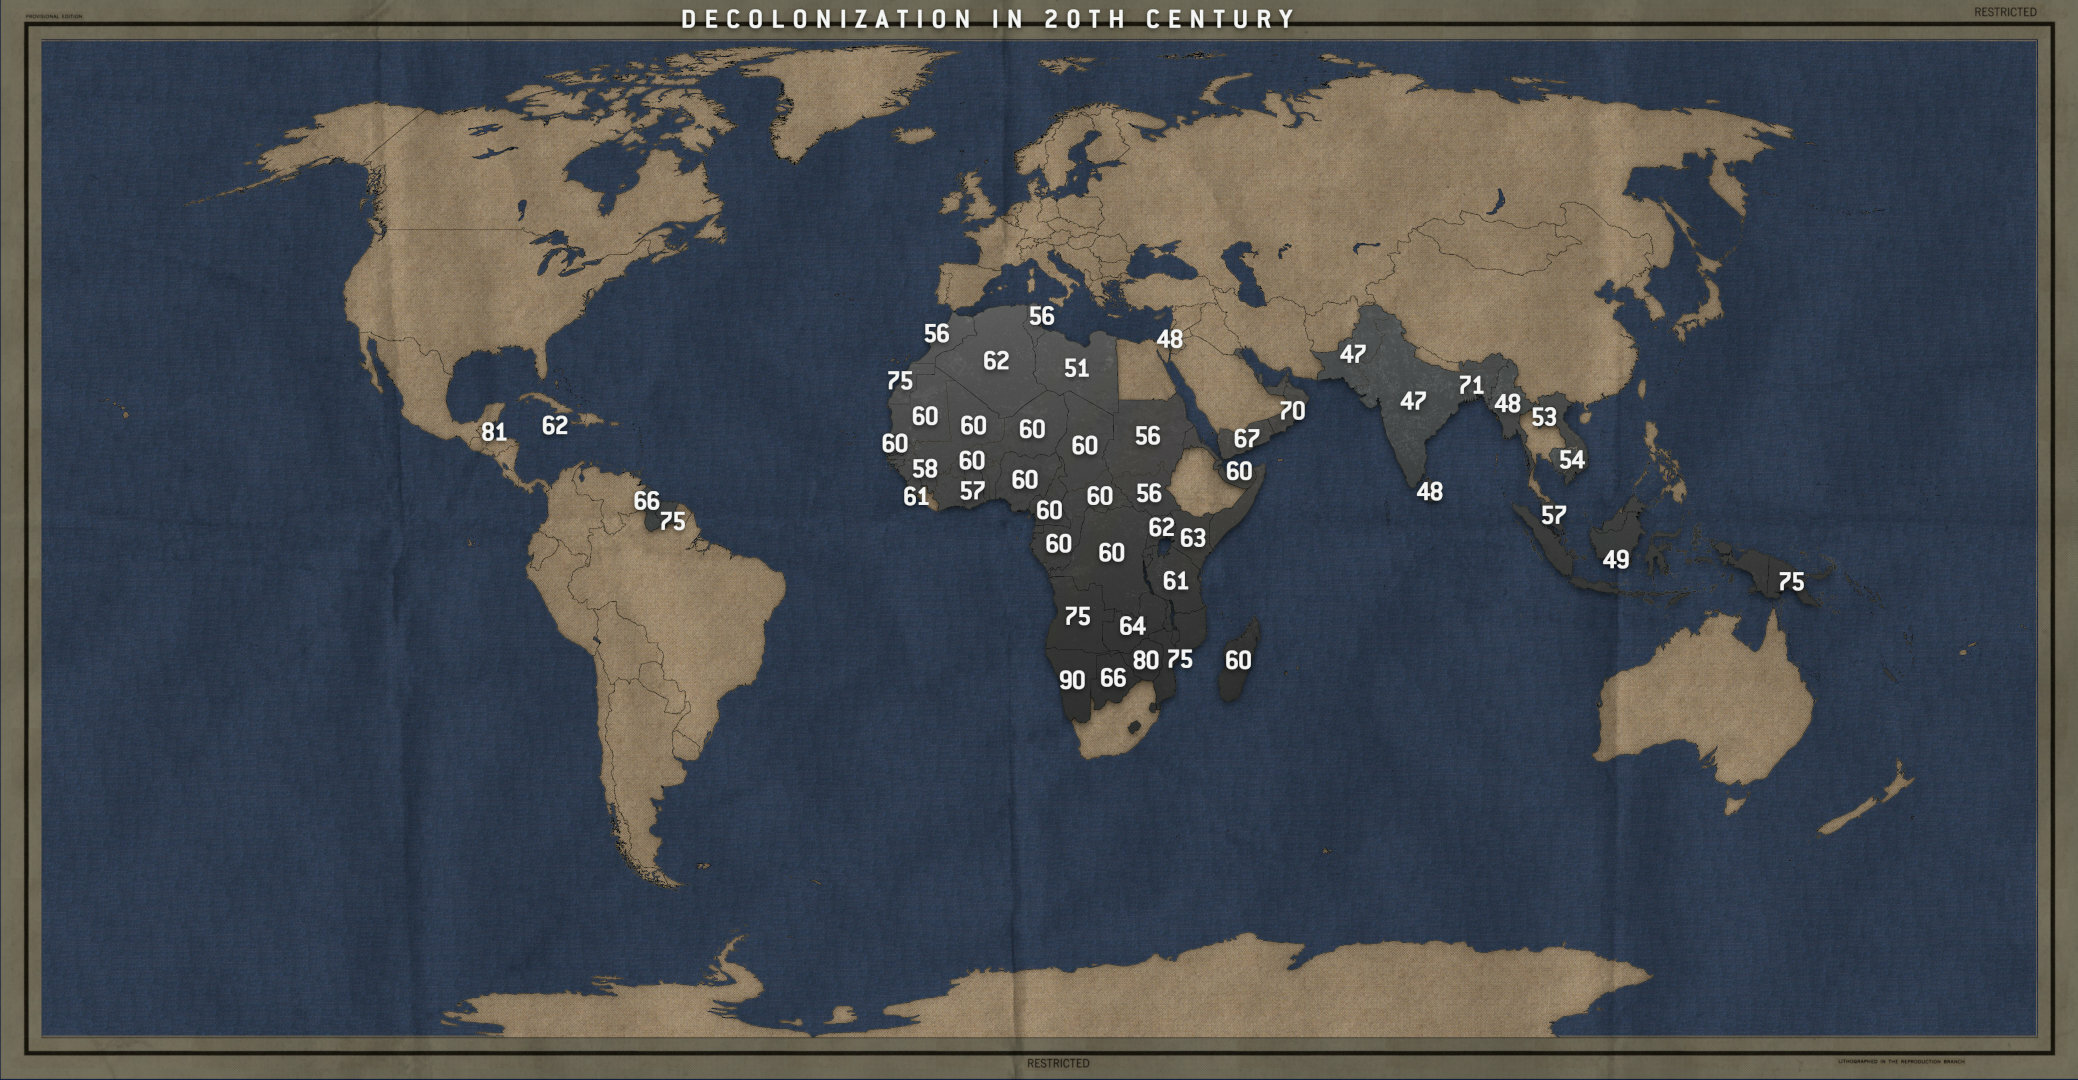 i updated my gmod world map, feel free to give me feedback! (key